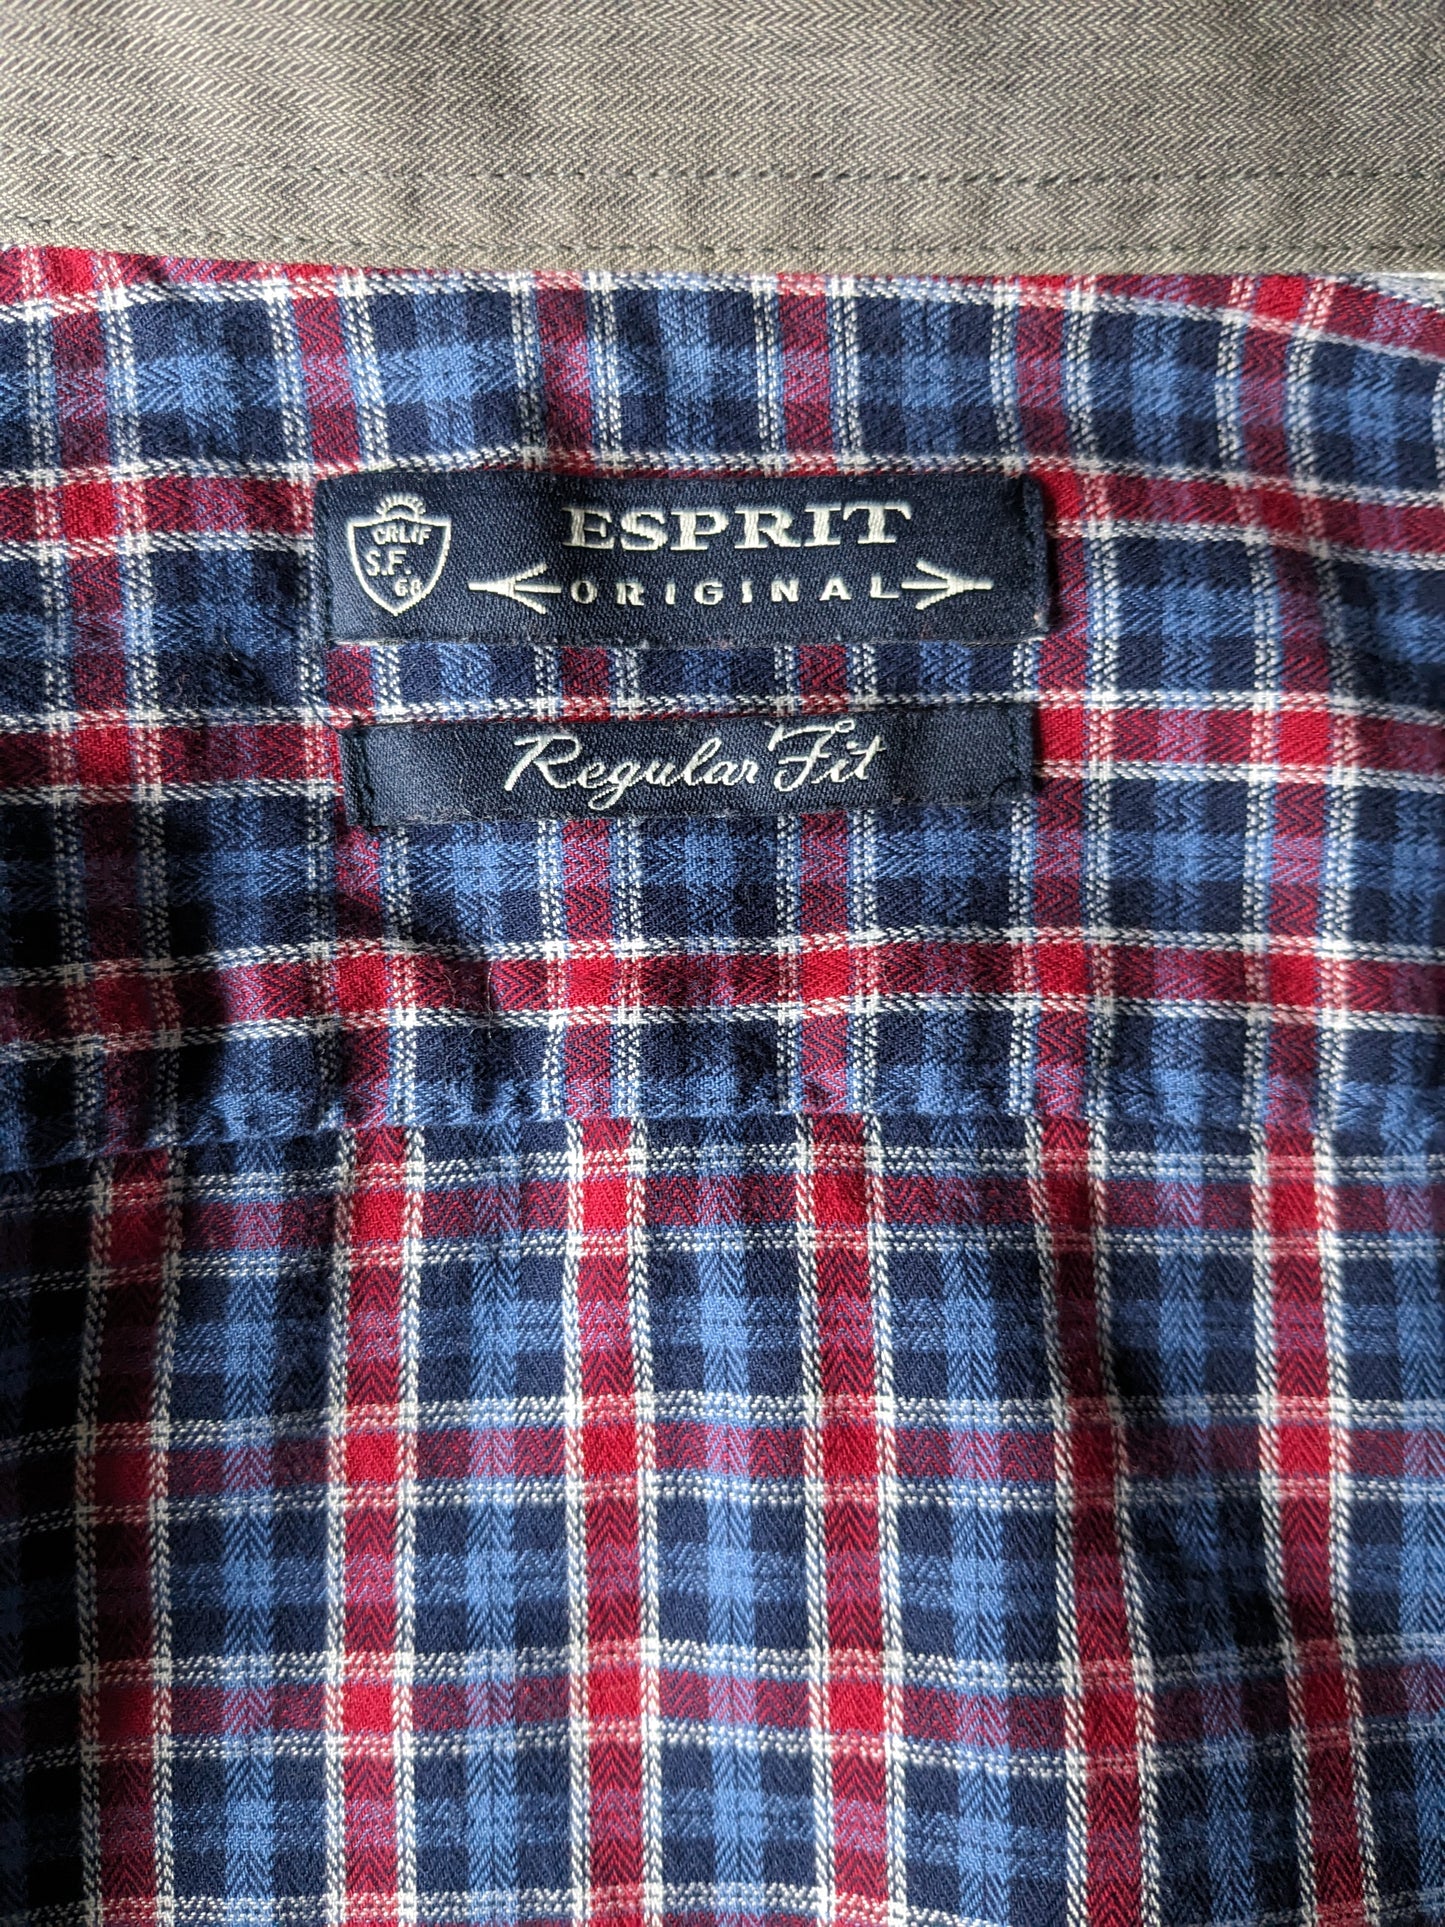 Esprit shirt. Blue red black checked. Size M. Regular Fit.